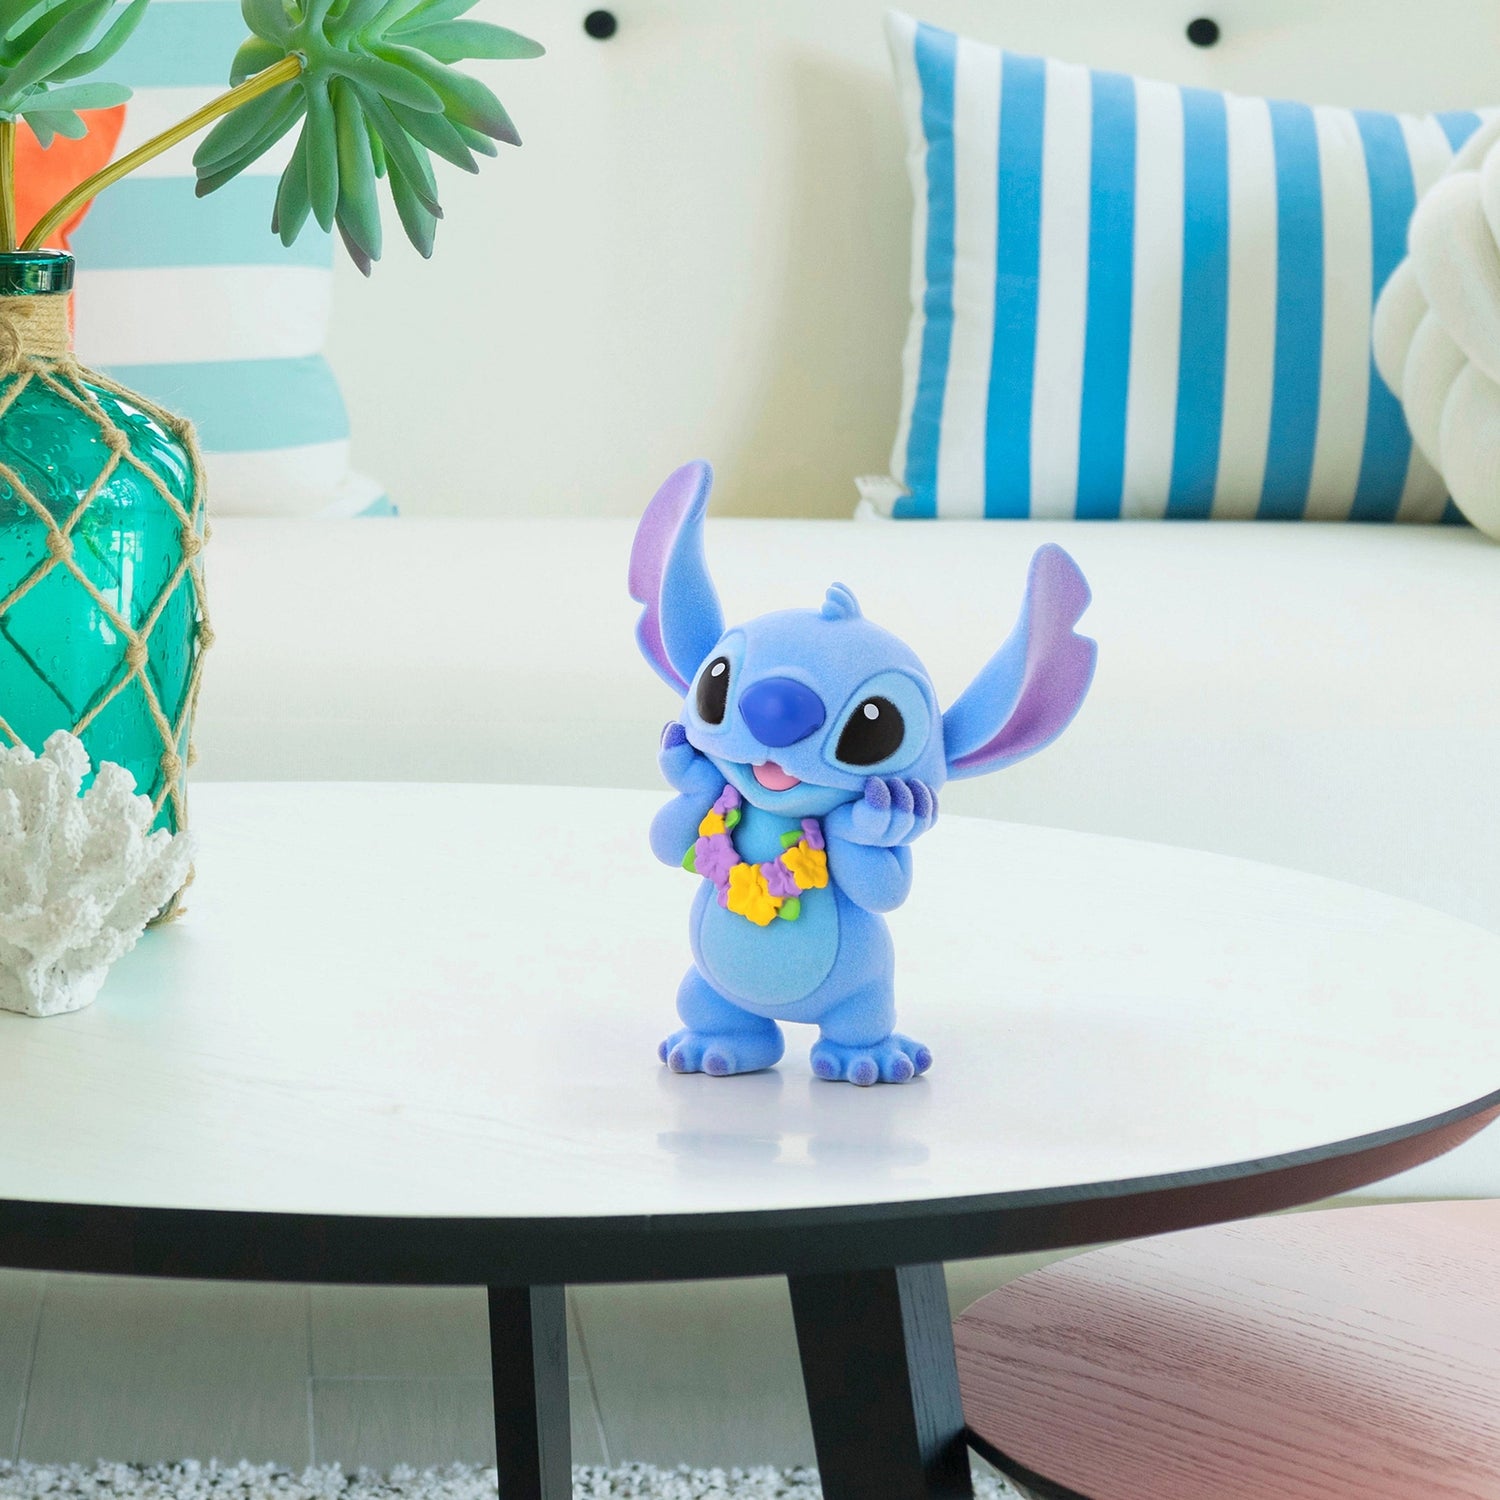 Enesco Grand Jester Studios Disney Flocked Stitch Collectible Figurine (9cm)